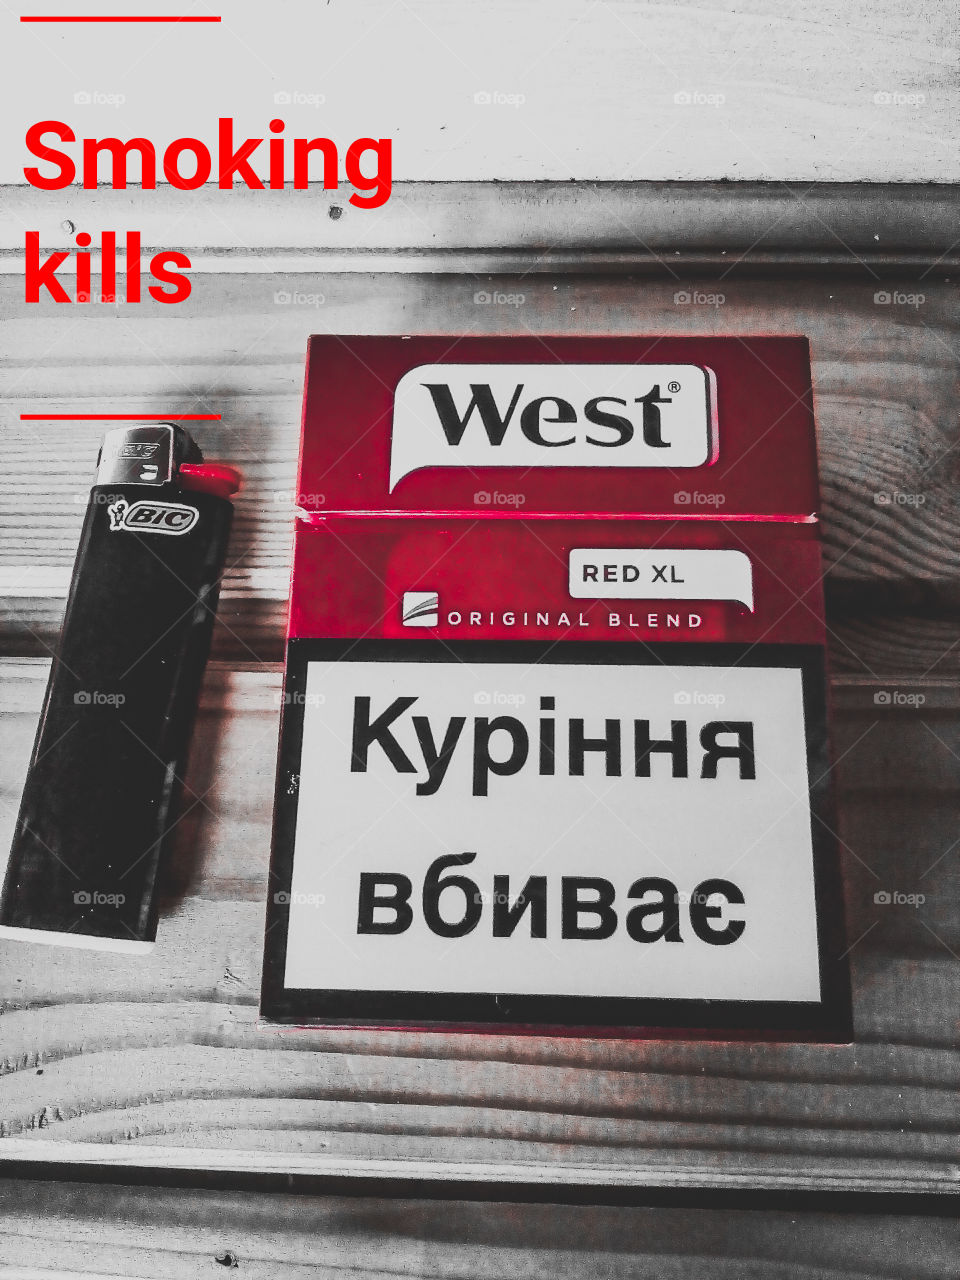 West sigaret Smoking kills